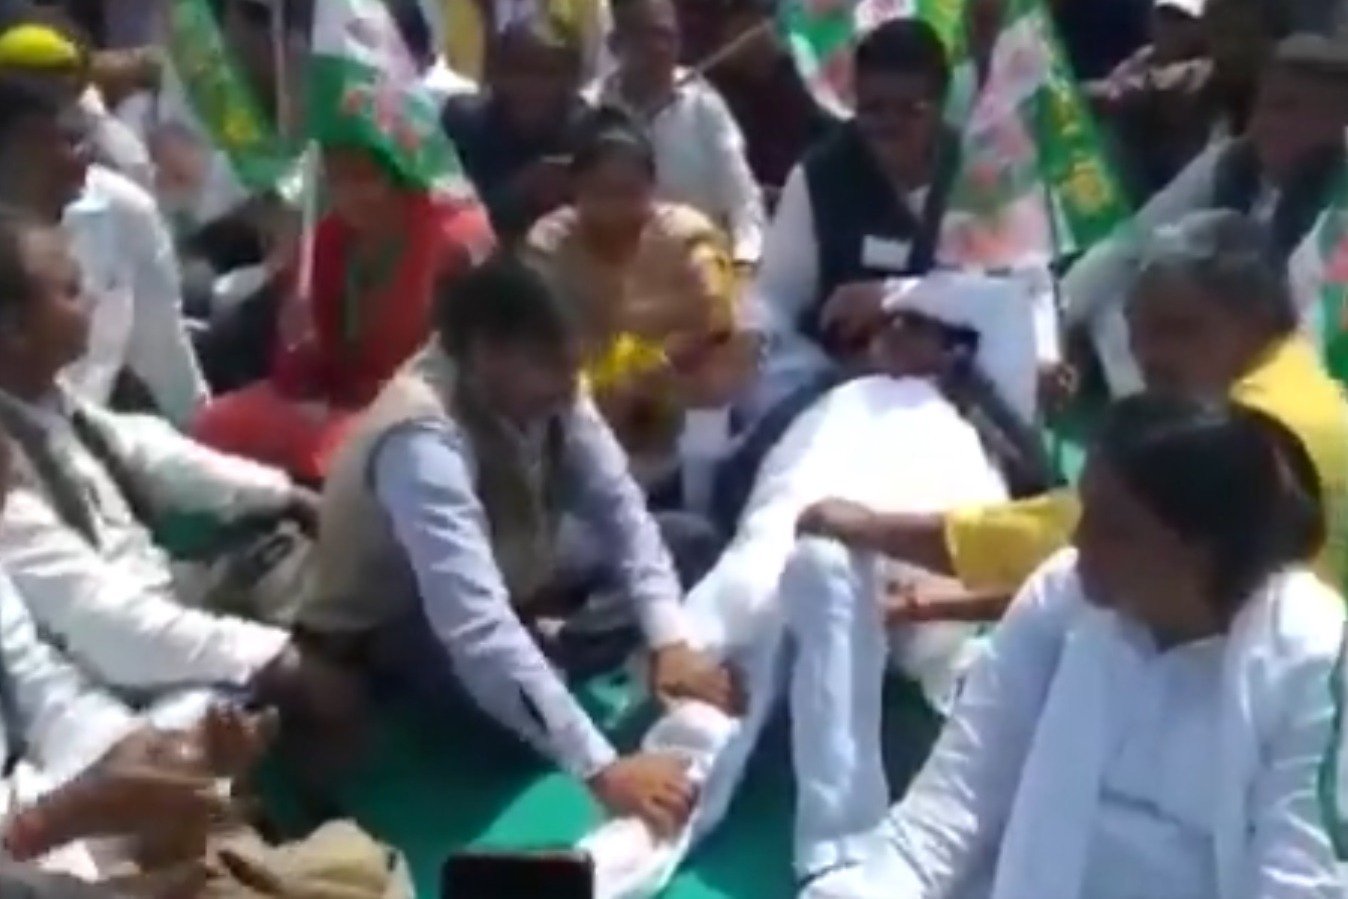 jdu legislator gets leg massage by partymen at a rally